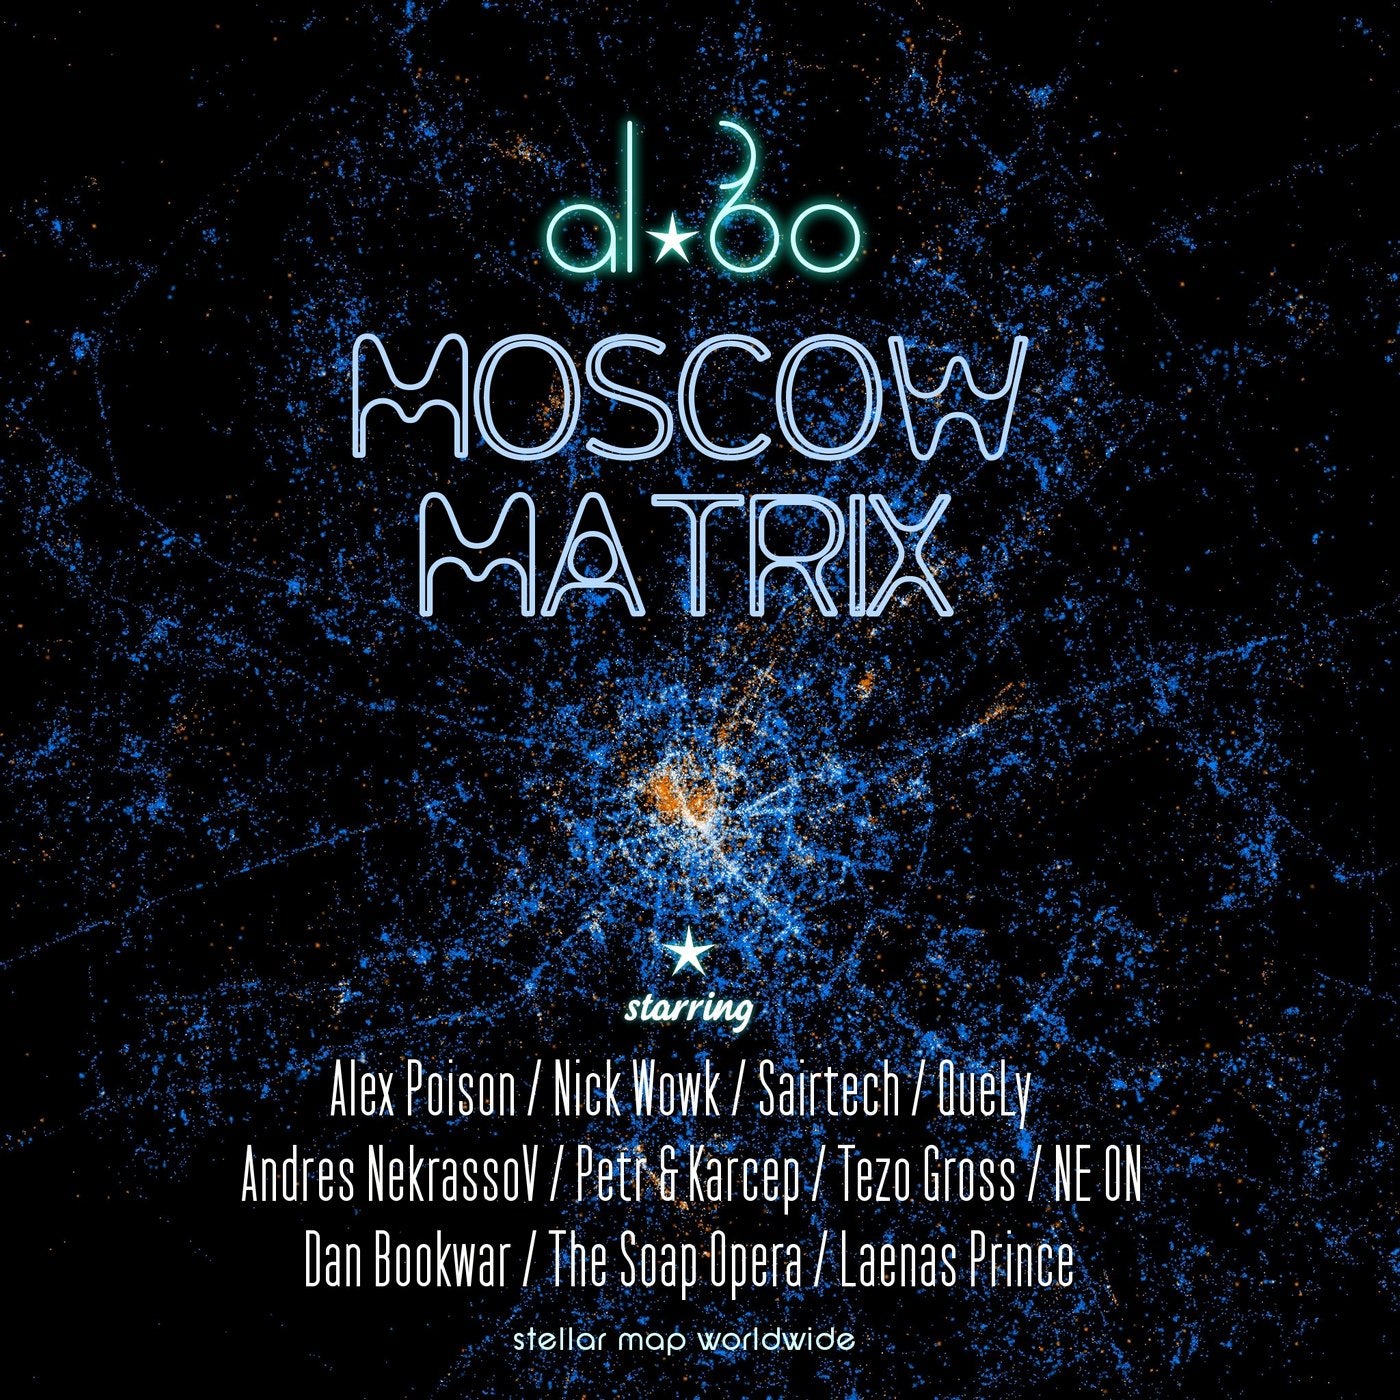 Moscow Matrix